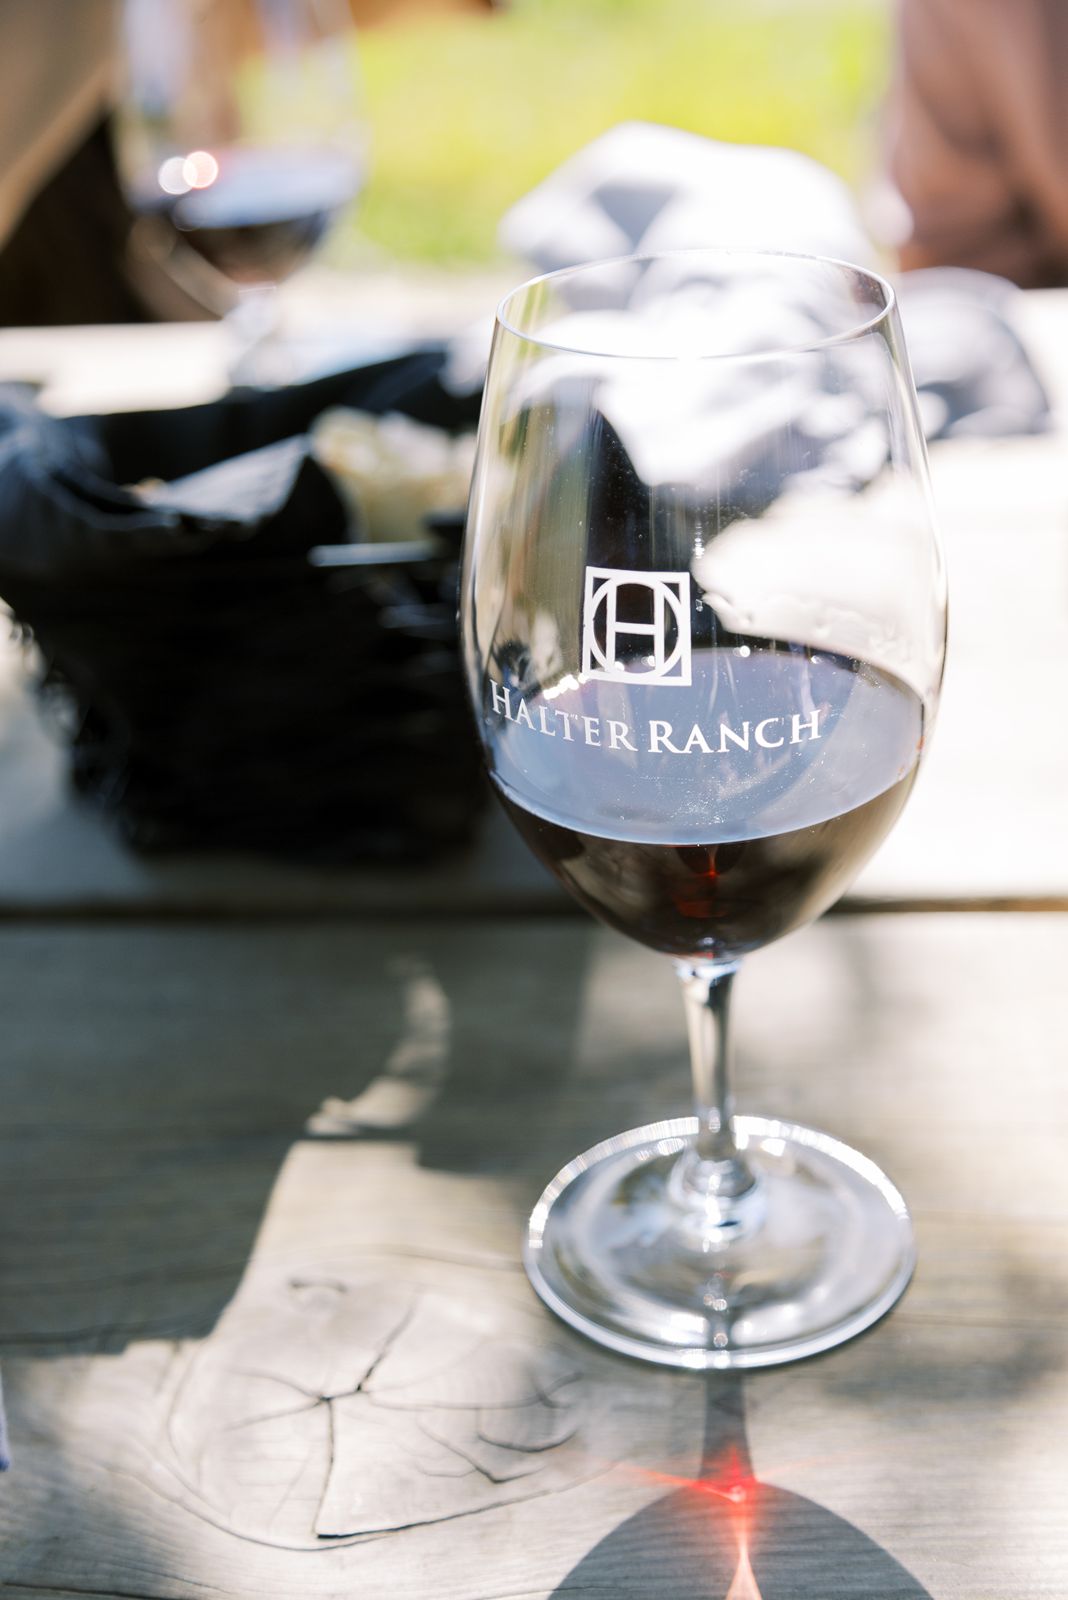 Halter Ranch wine glass